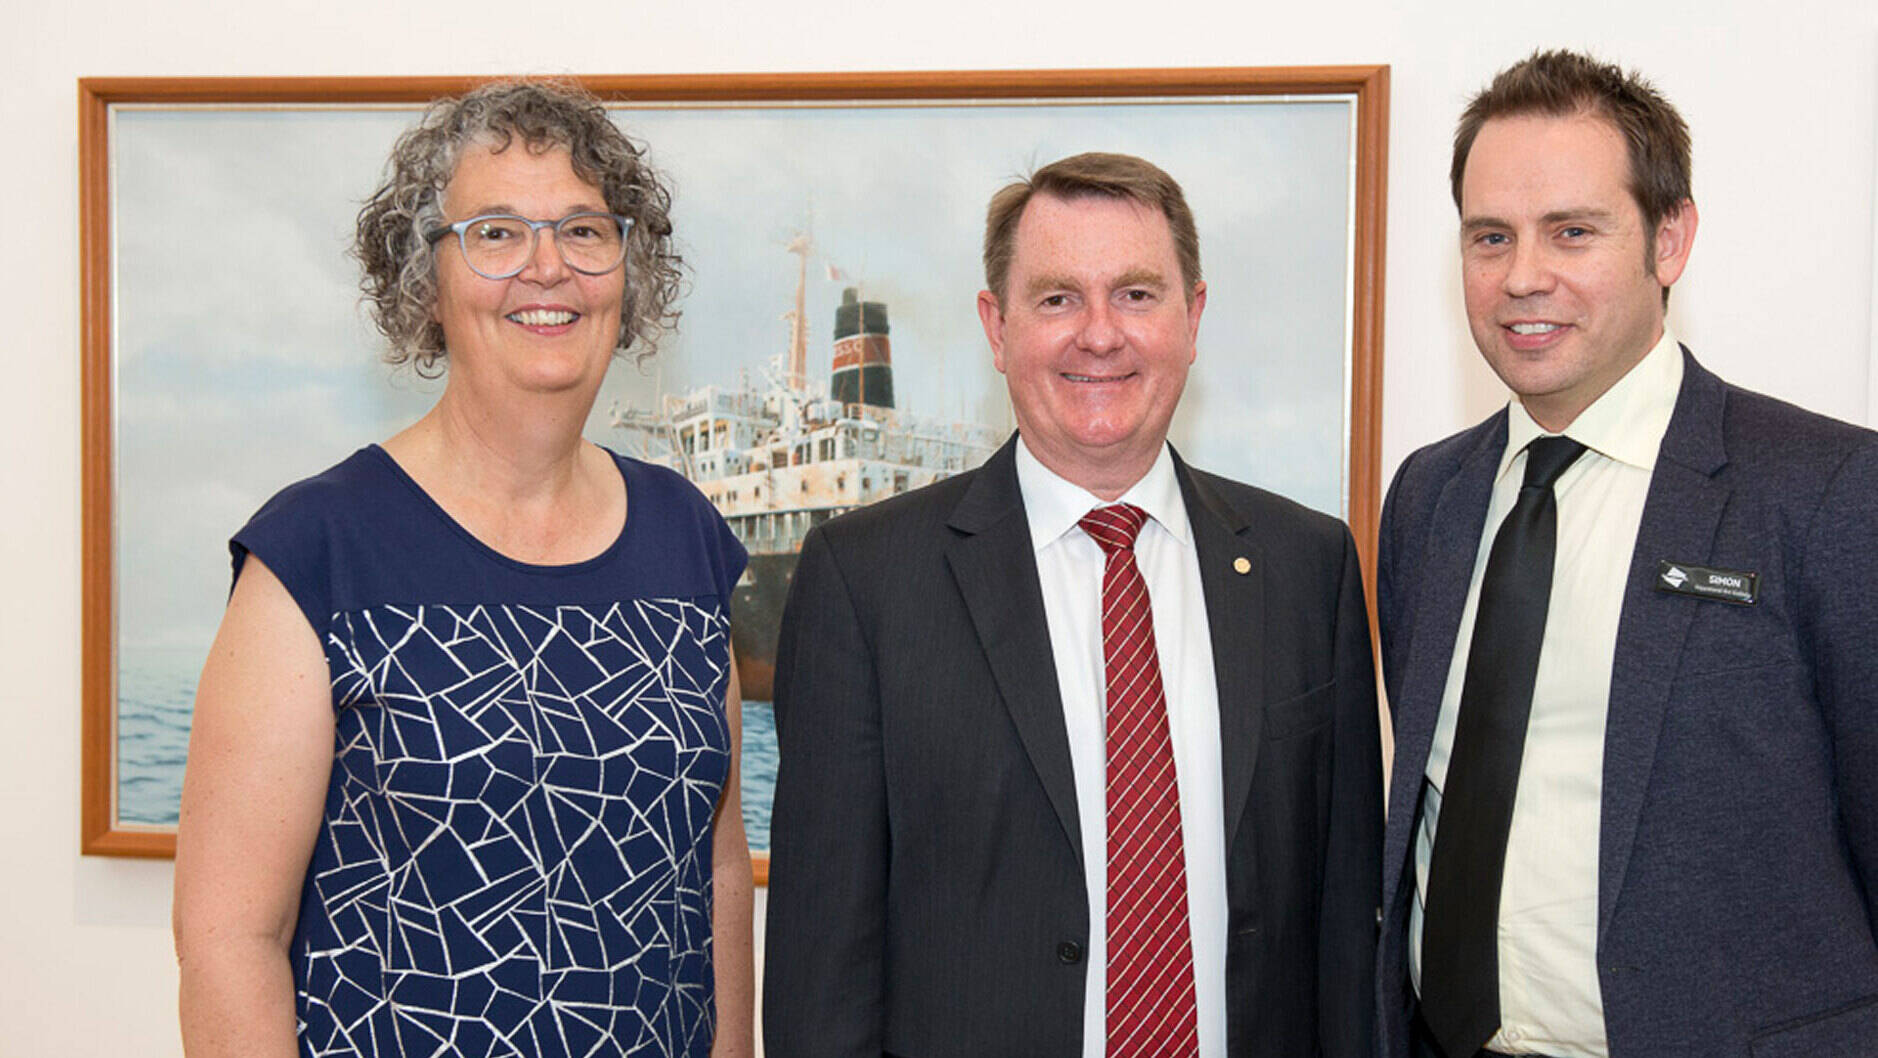 Image Photo — Pictured from left are Wellington Shire Mayor Carolyn Crossley, ExxonMobil Australia Chairman Richard Owen and Gippsland Art Gallery Director Simon Gregg.